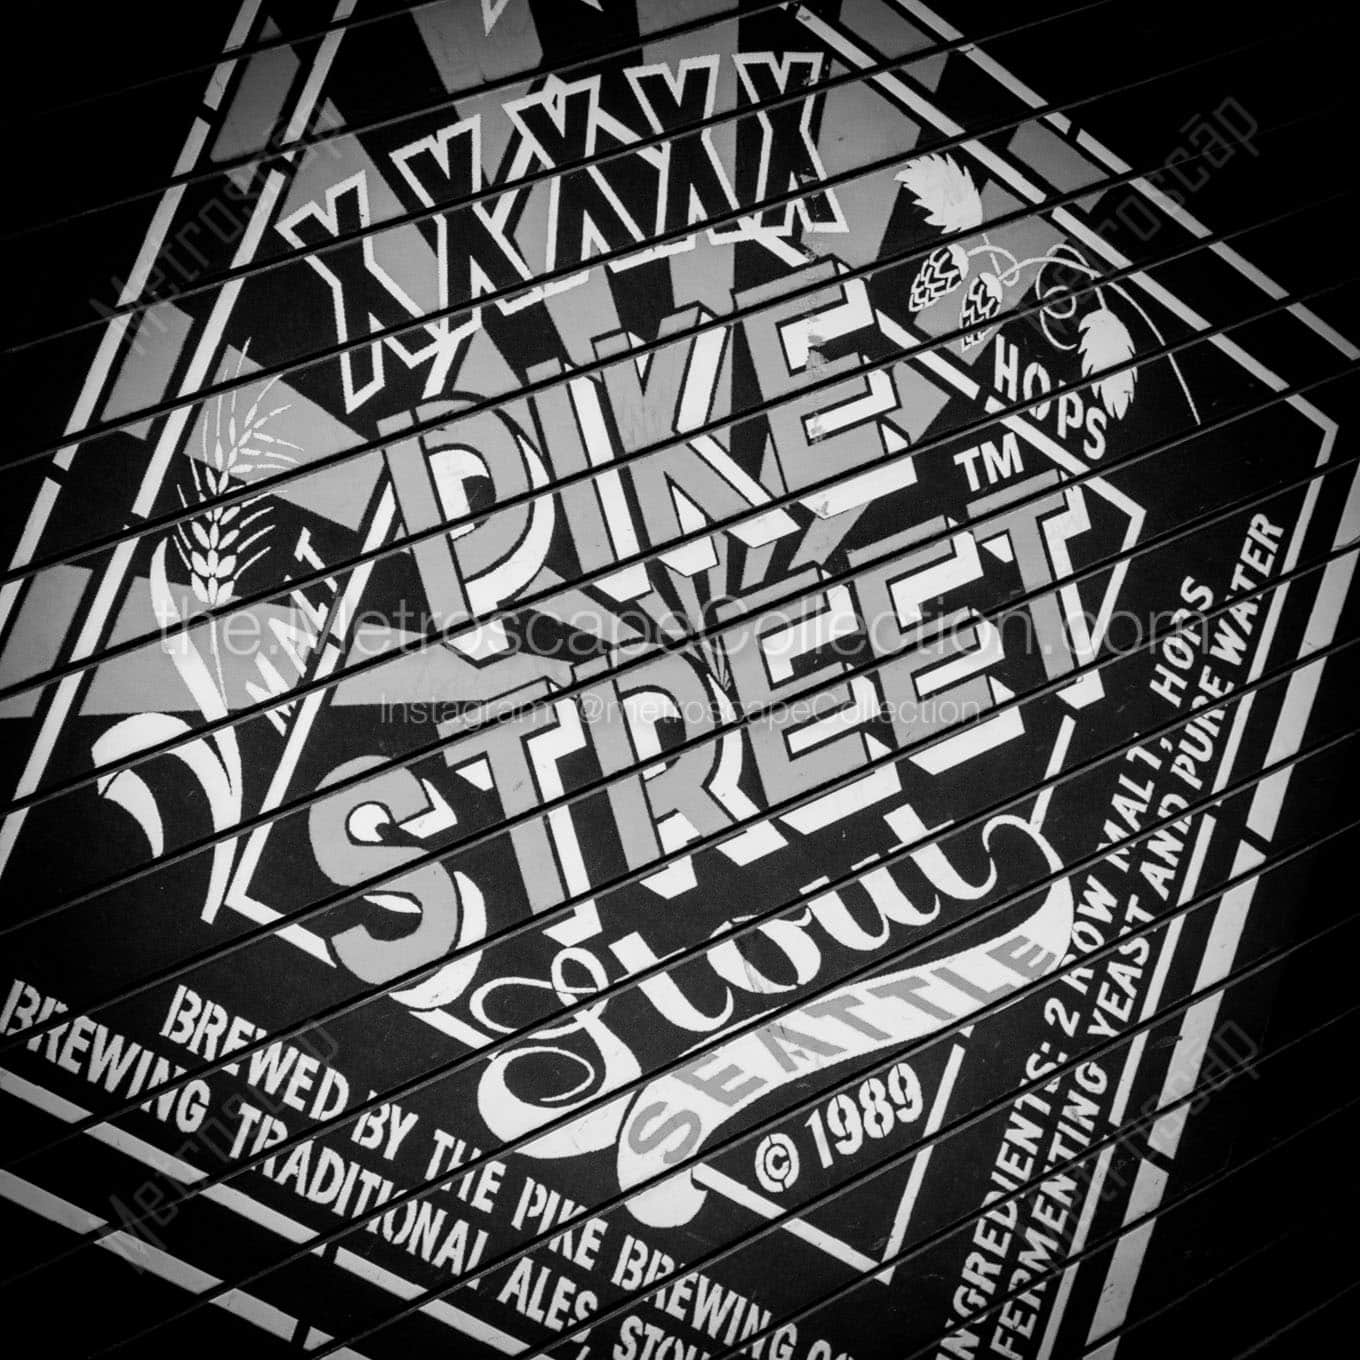 pike street stout Black & White Office Art